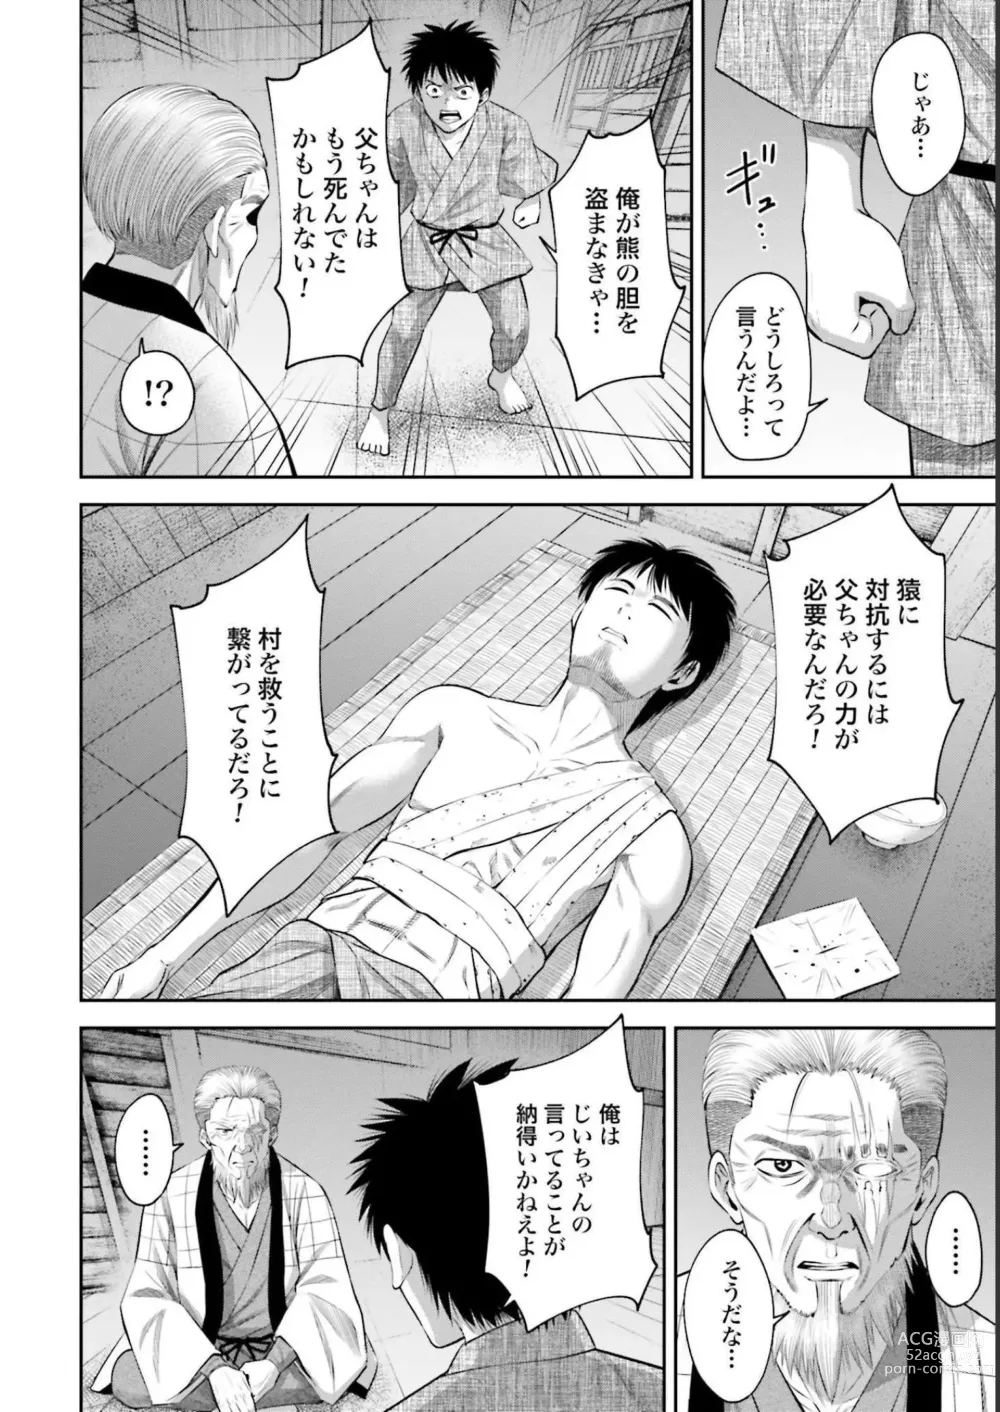 Page 152 of manga Sarumane Vol. 3